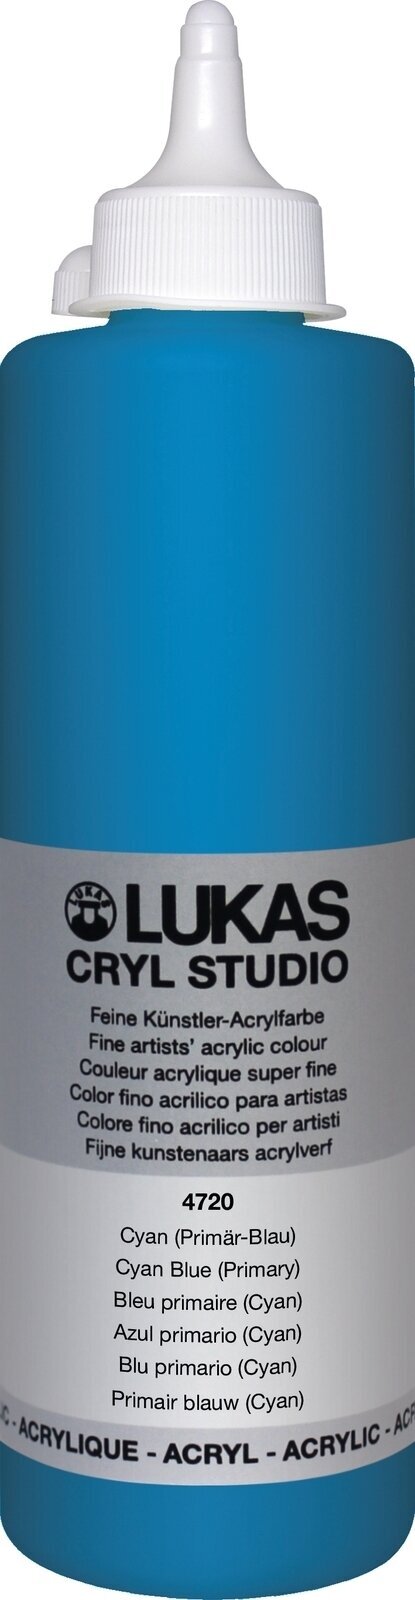 Акрилна боя Lukas Cryl Studio АКРИЛНА боя 500 ml Cyan Blue (Primary)